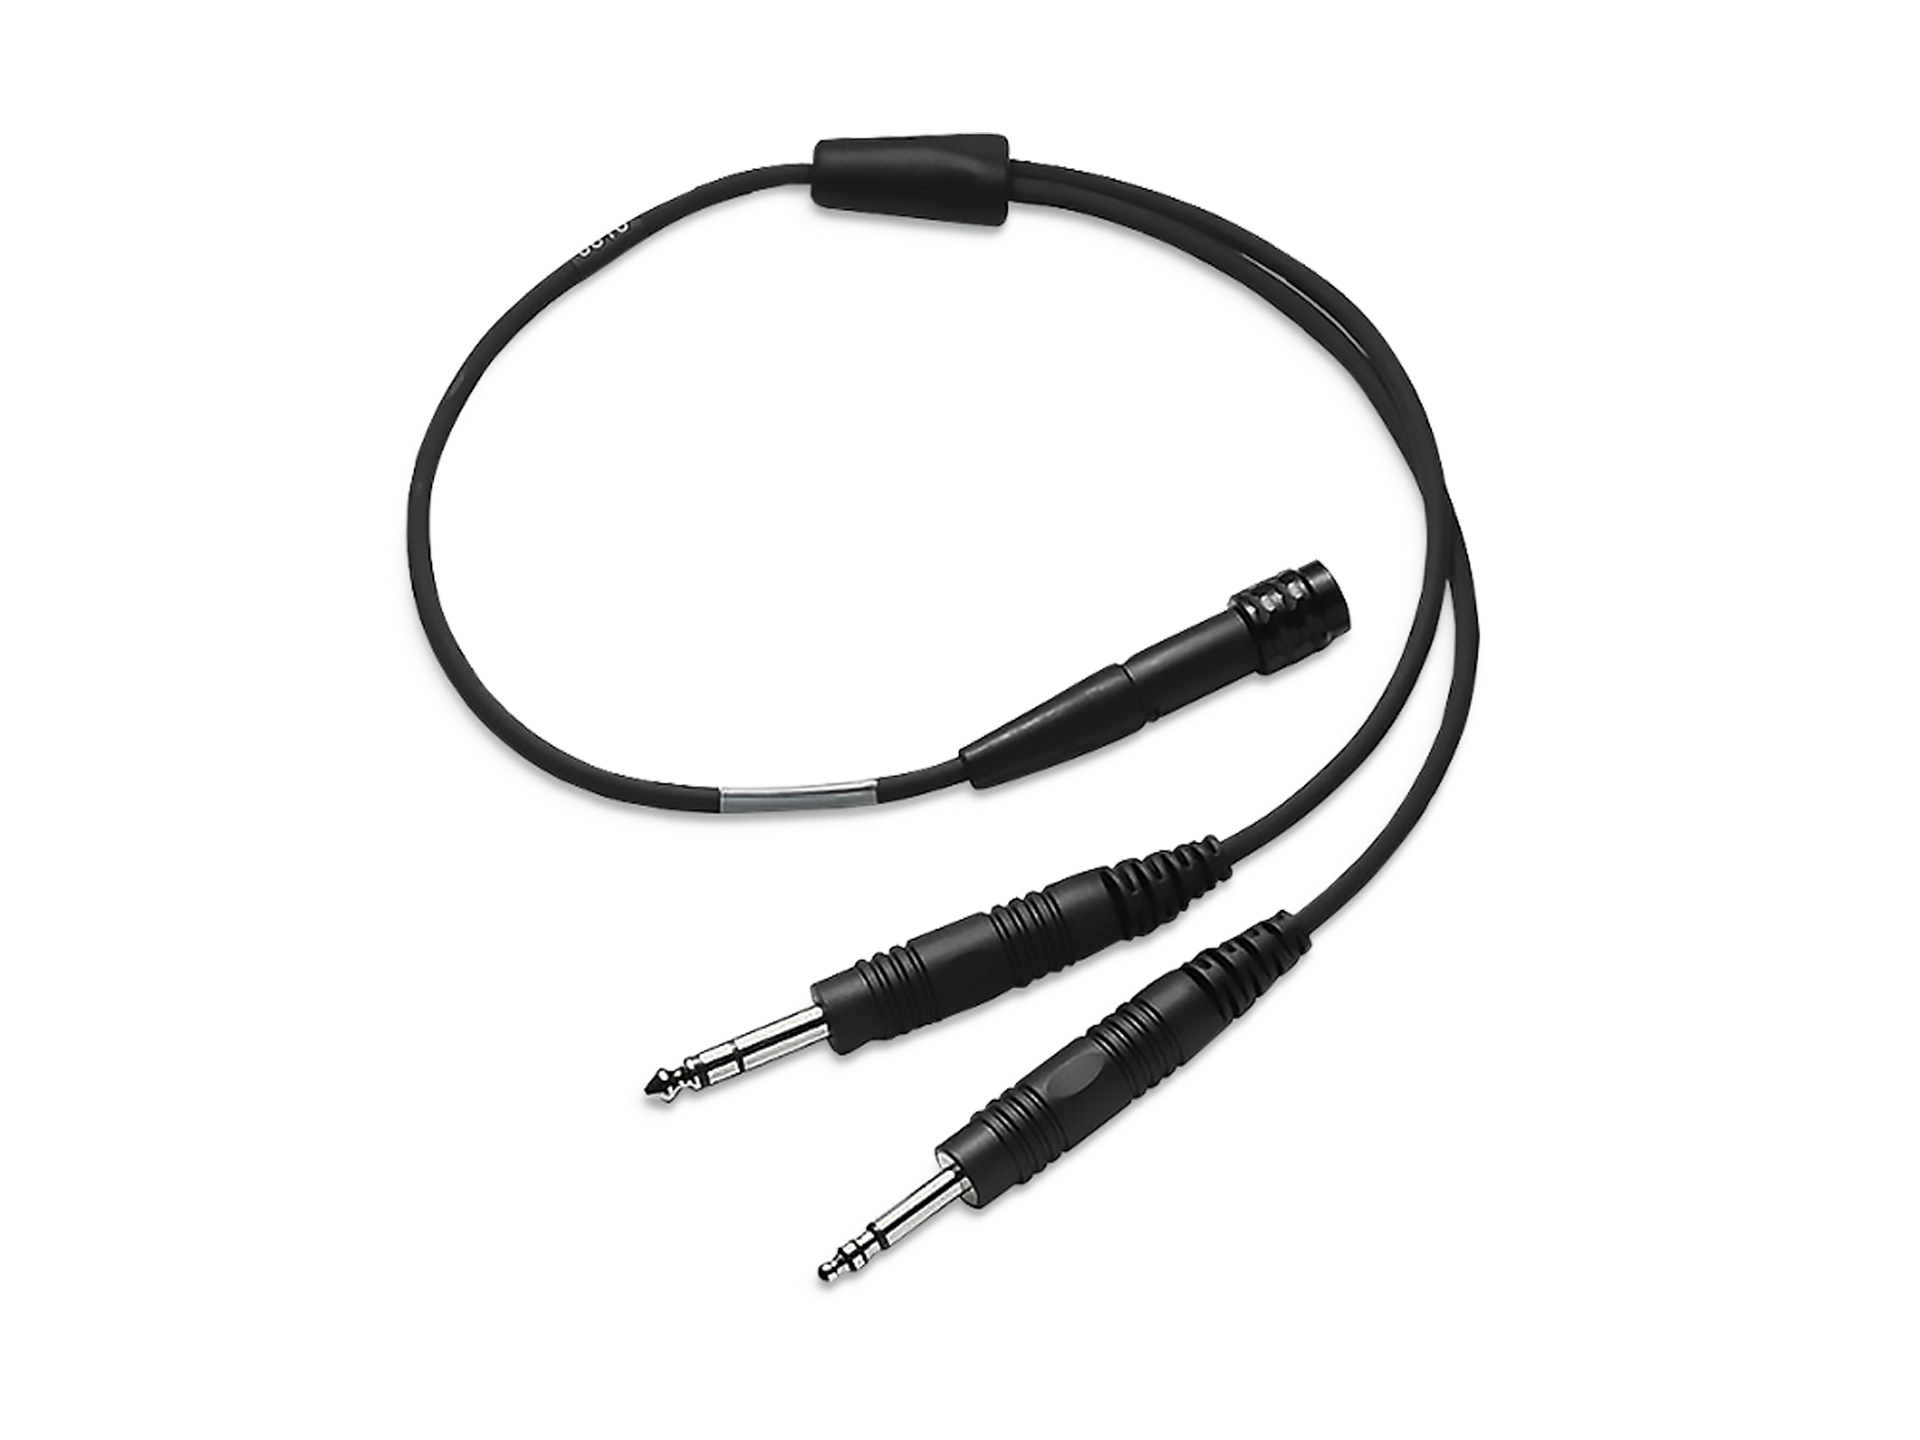 Bose A20 Headset 6-pin to Dual GA Plugs Adapter (327080-0010)Image Id:144817